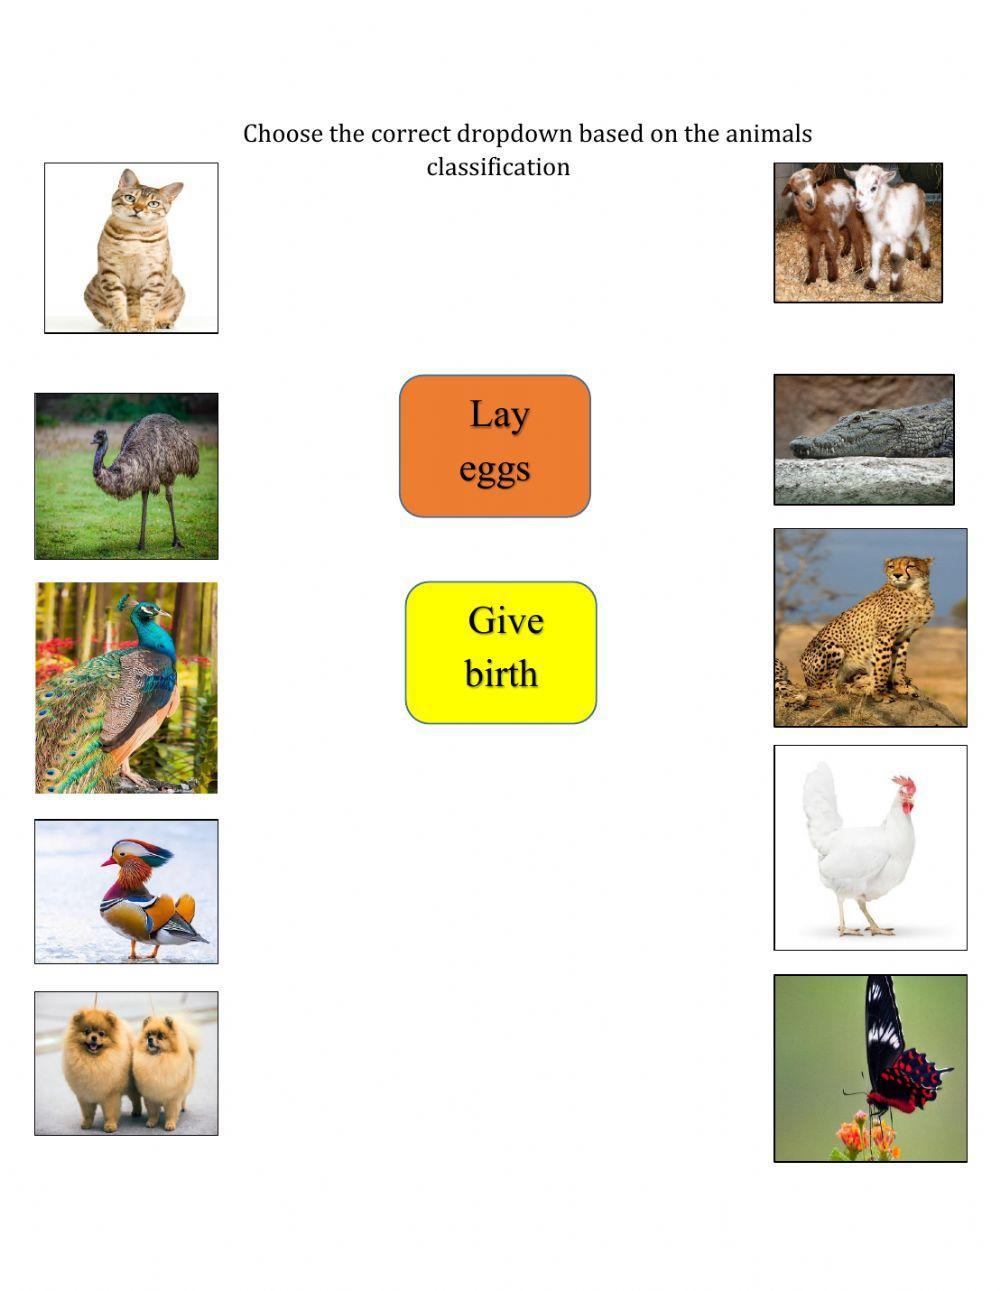 Classification of animals